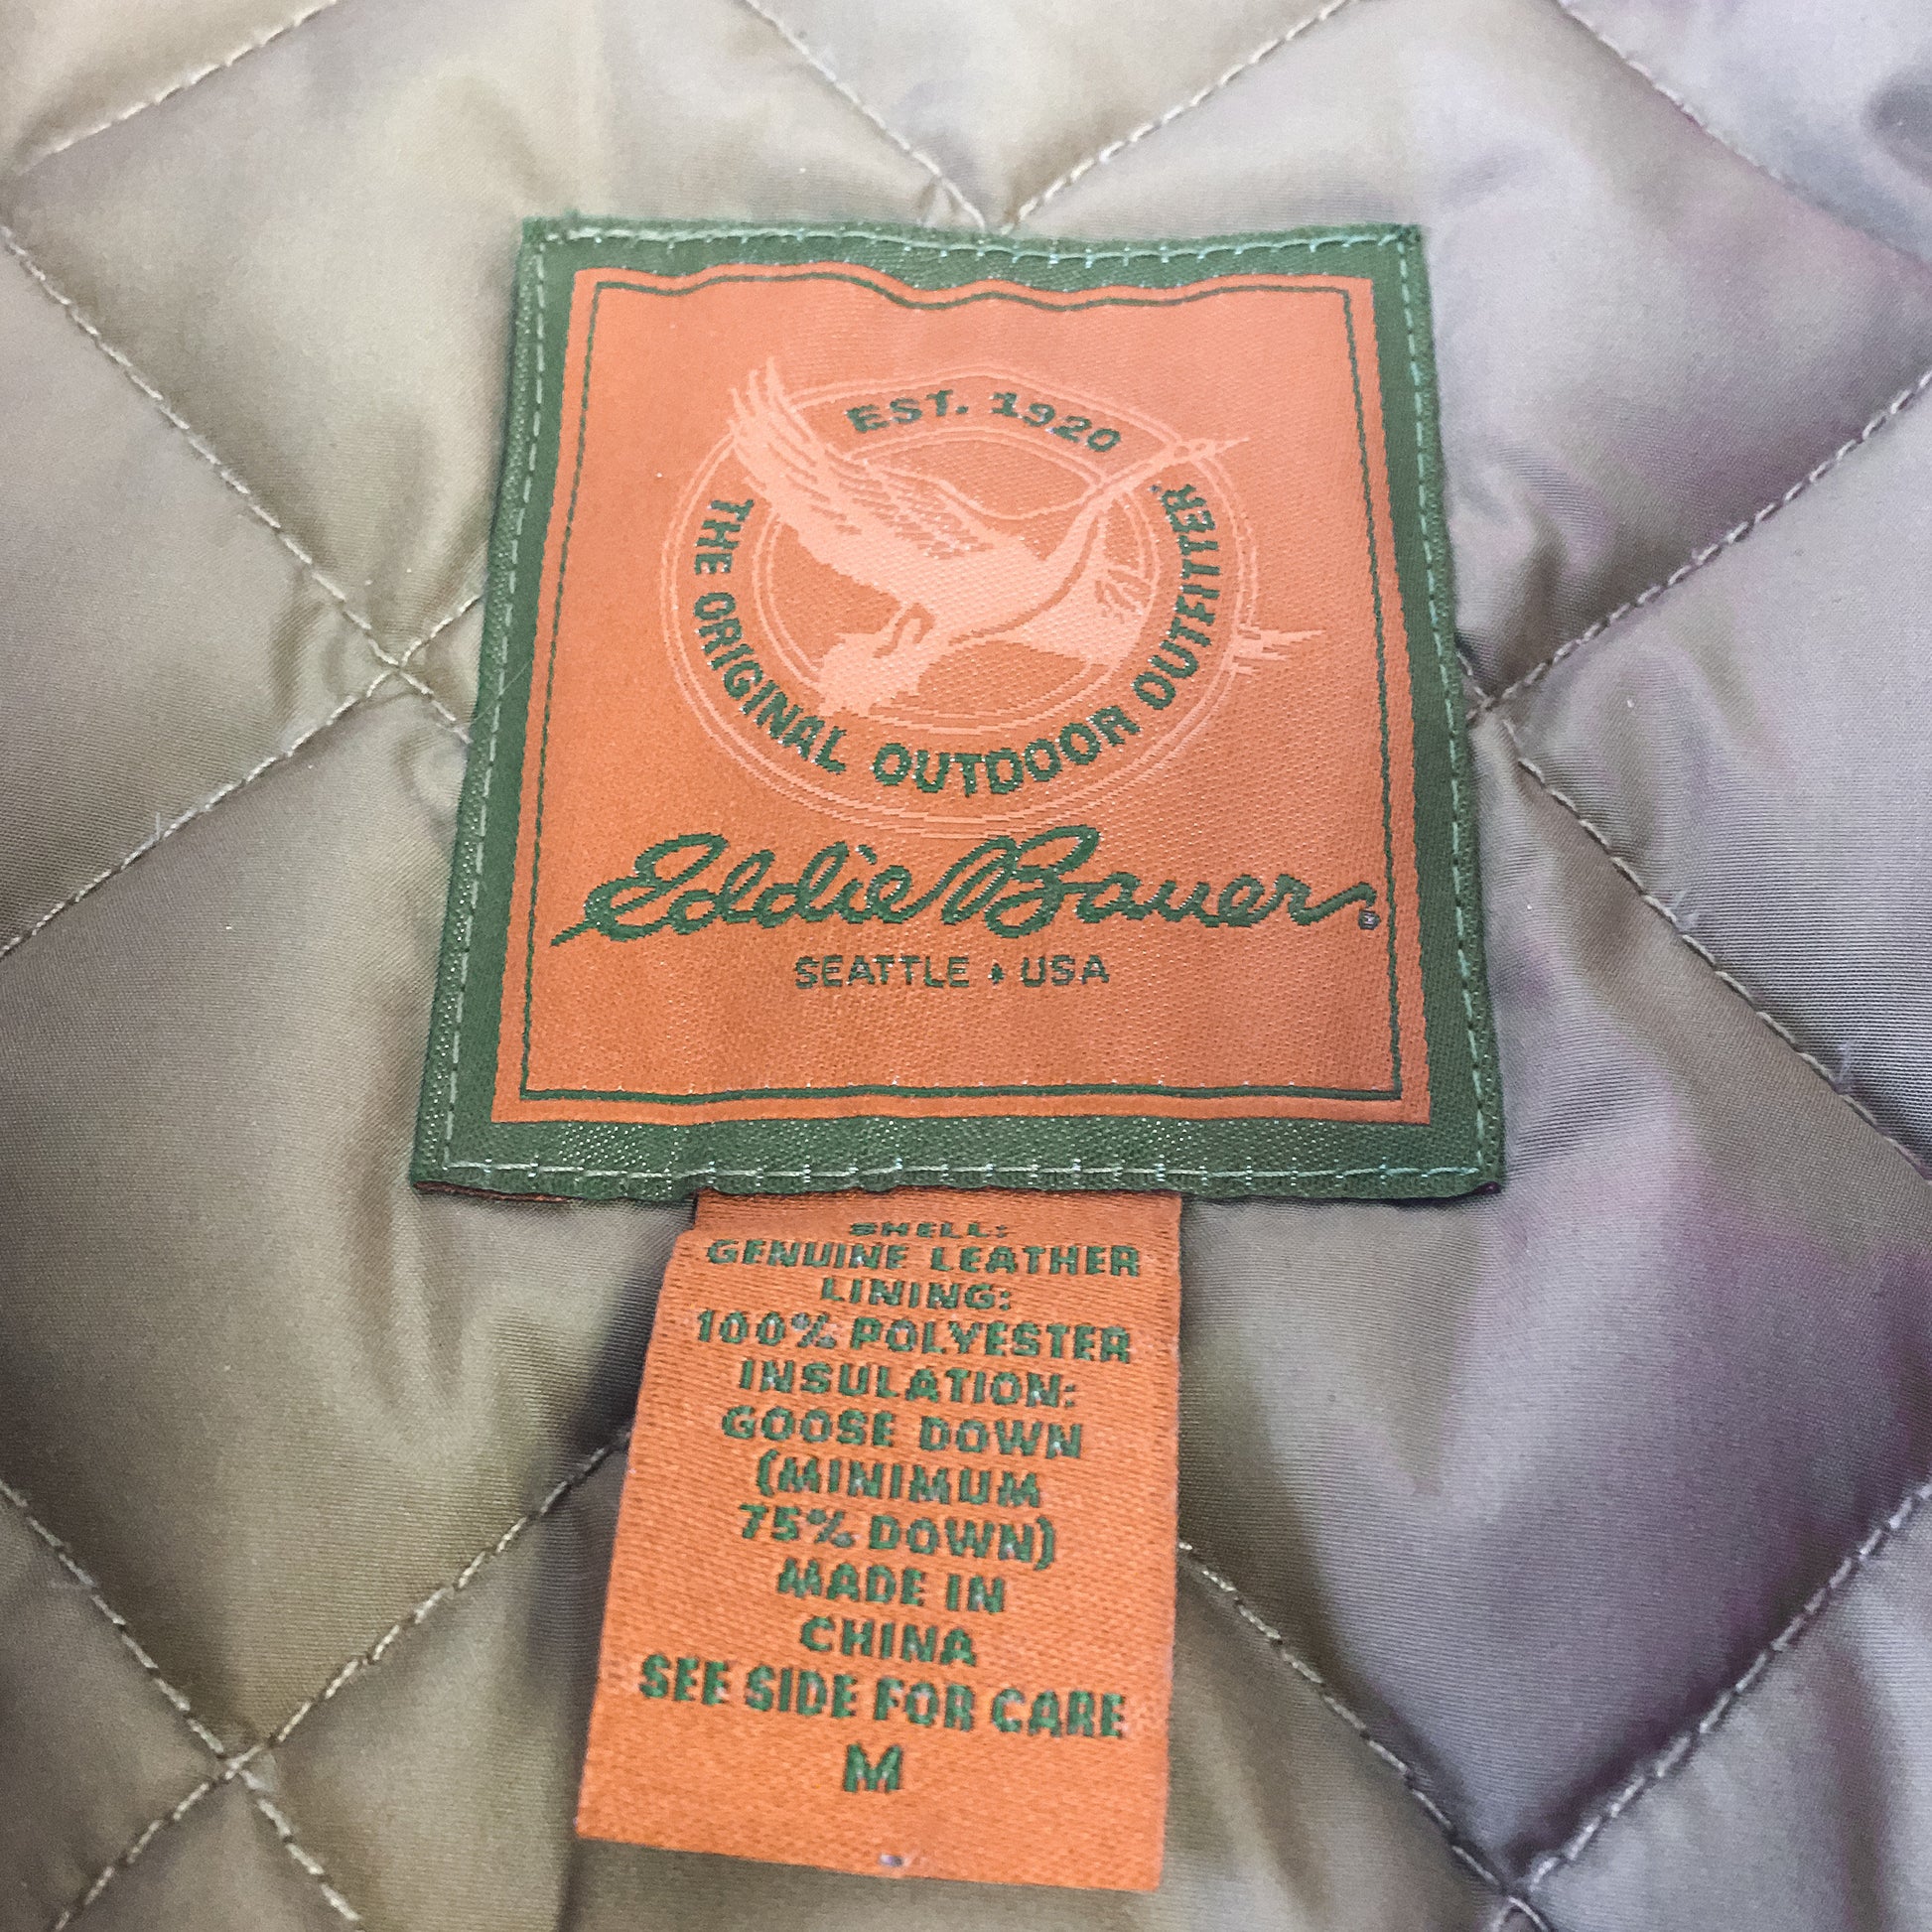 Vintage Eddie Bauer Tan/Light Brown Goose Down Leather Bomber Jacket, Sz. M